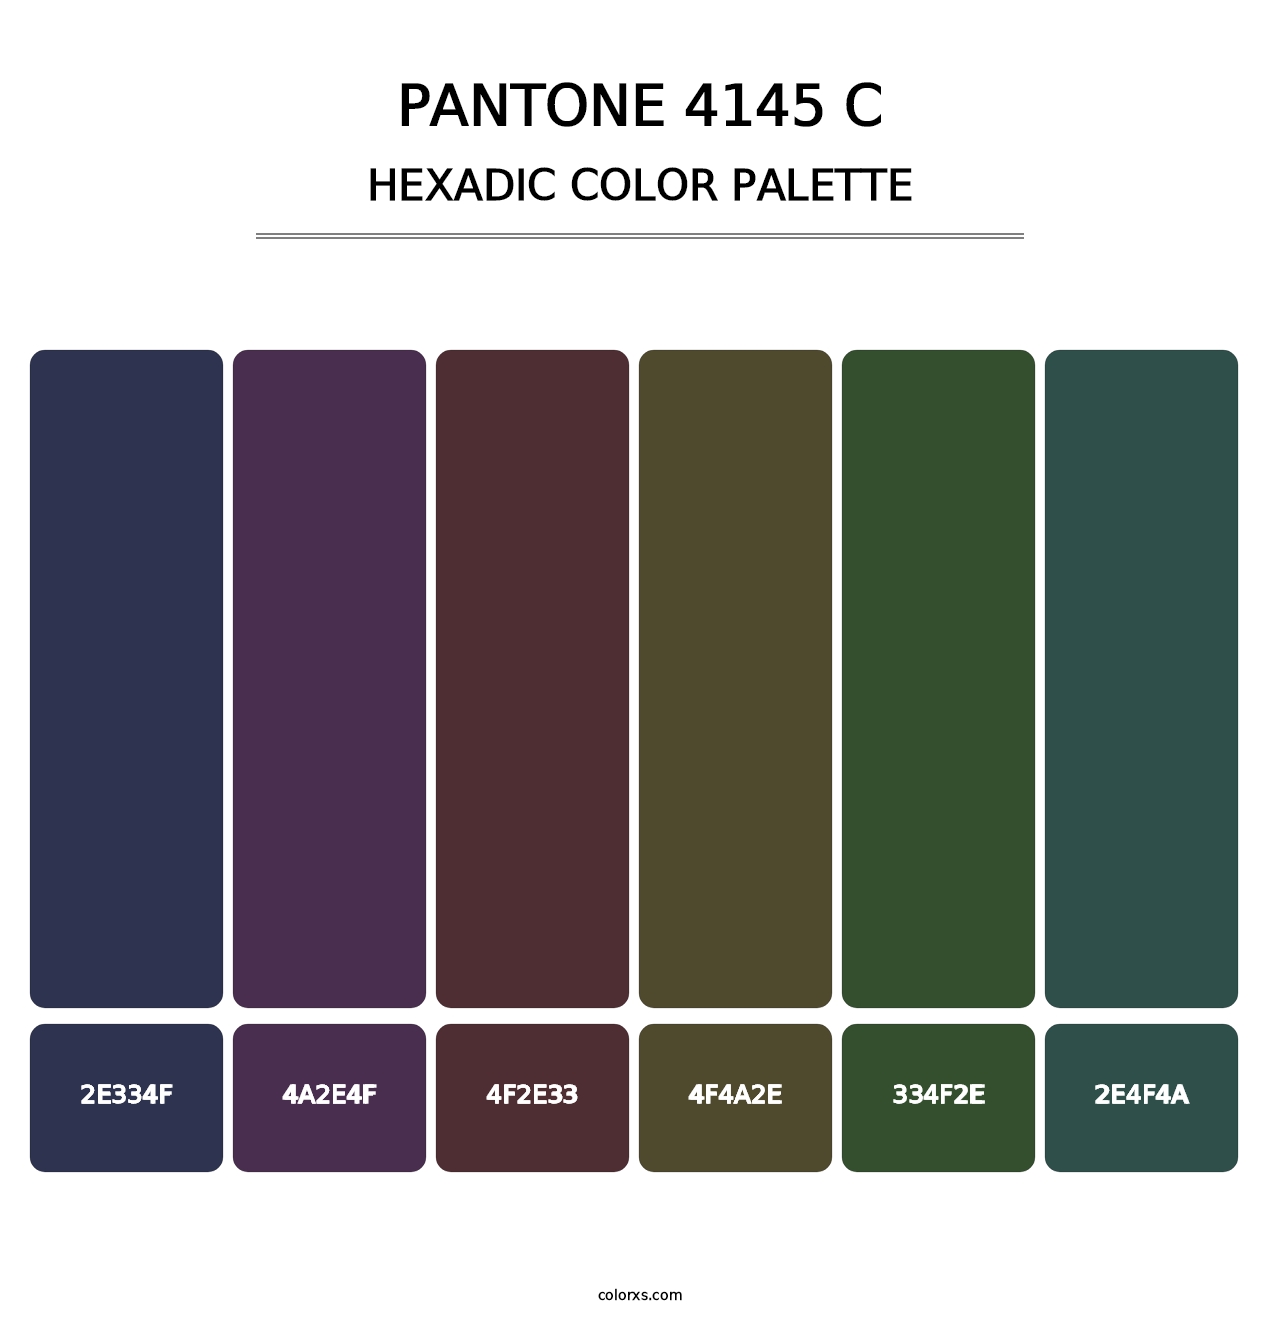 PANTONE 4145 C - Hexadic Color Palette